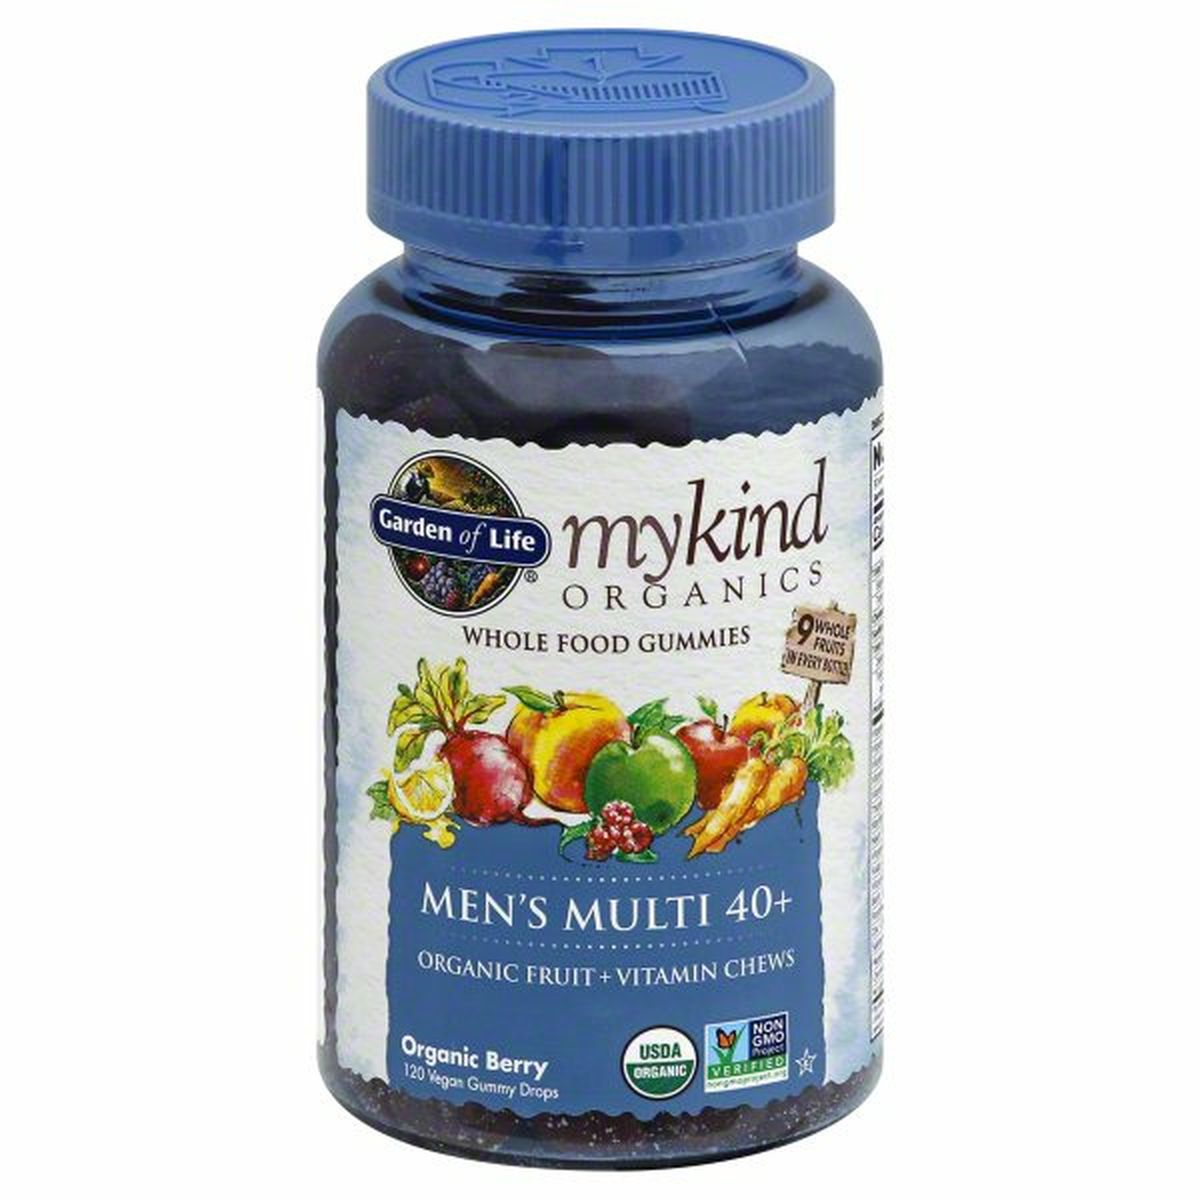 Calories in Garden of Life MyKind Organics Men's Multi 40 +,  Fruit & Vitamin Chews, Gummy Drops, Organic Berry